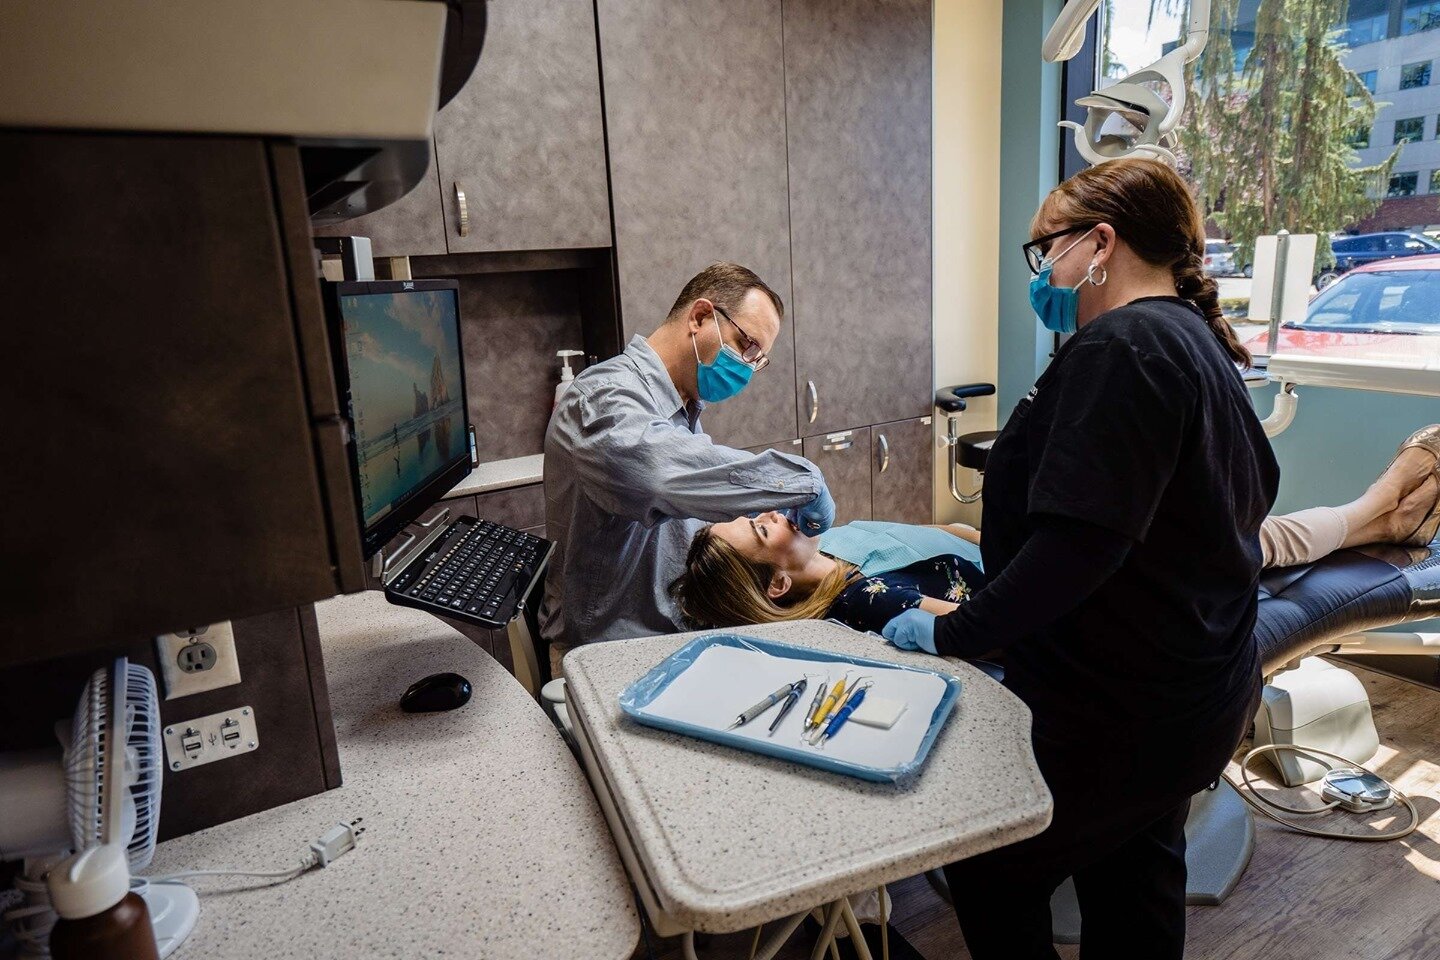 Dentist at work in Kirkland.⁠
⁠
⁠
#Dentist #CorporatePhotography #Working #CommercialPhotography #SeattlePhotographer